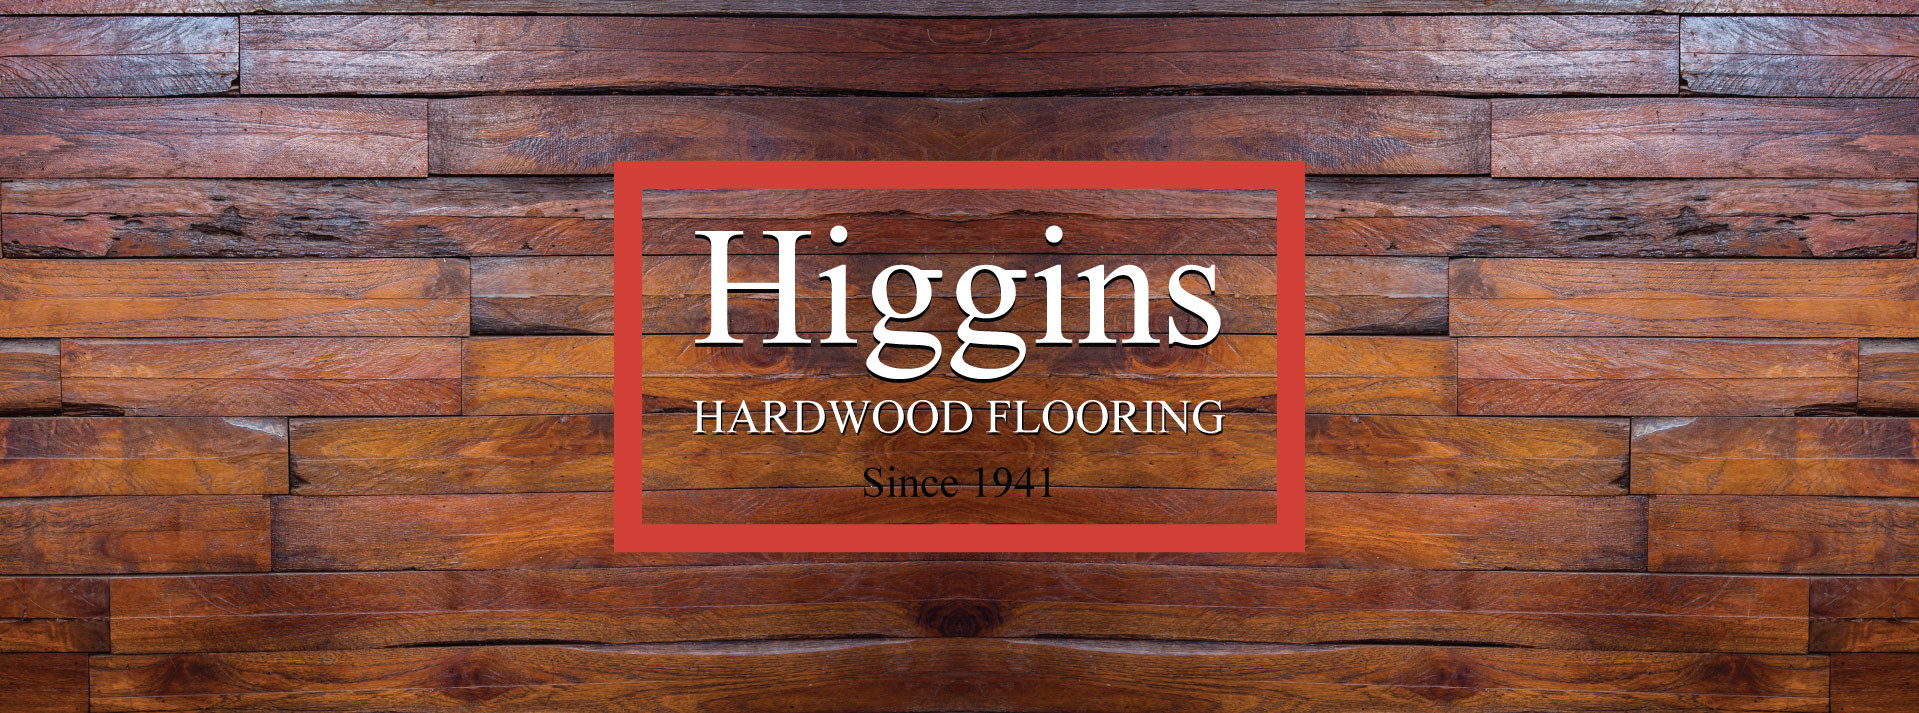 25 Elegant Hardwood Flooring Clearance Ontario 2024 free download hardwood flooring clearance ontario of higgins hardwood flooring in peterborough oshawa lindsay ajax within office hours